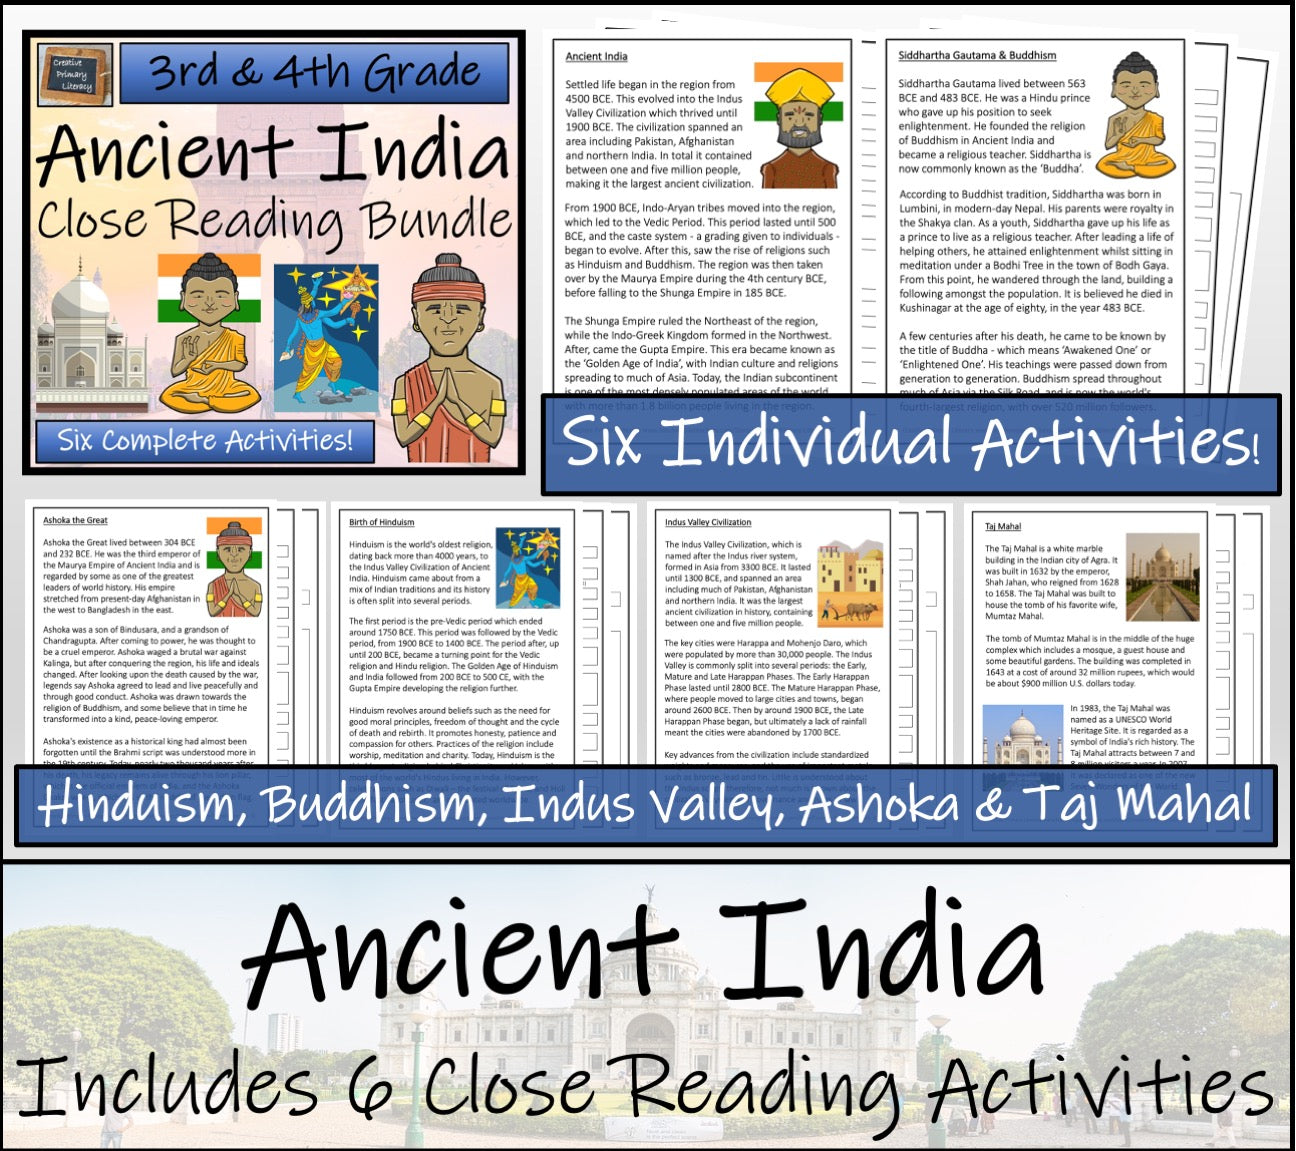 Ancient India Mega Bundle of Activities | 3rd Grade & 4th Grade